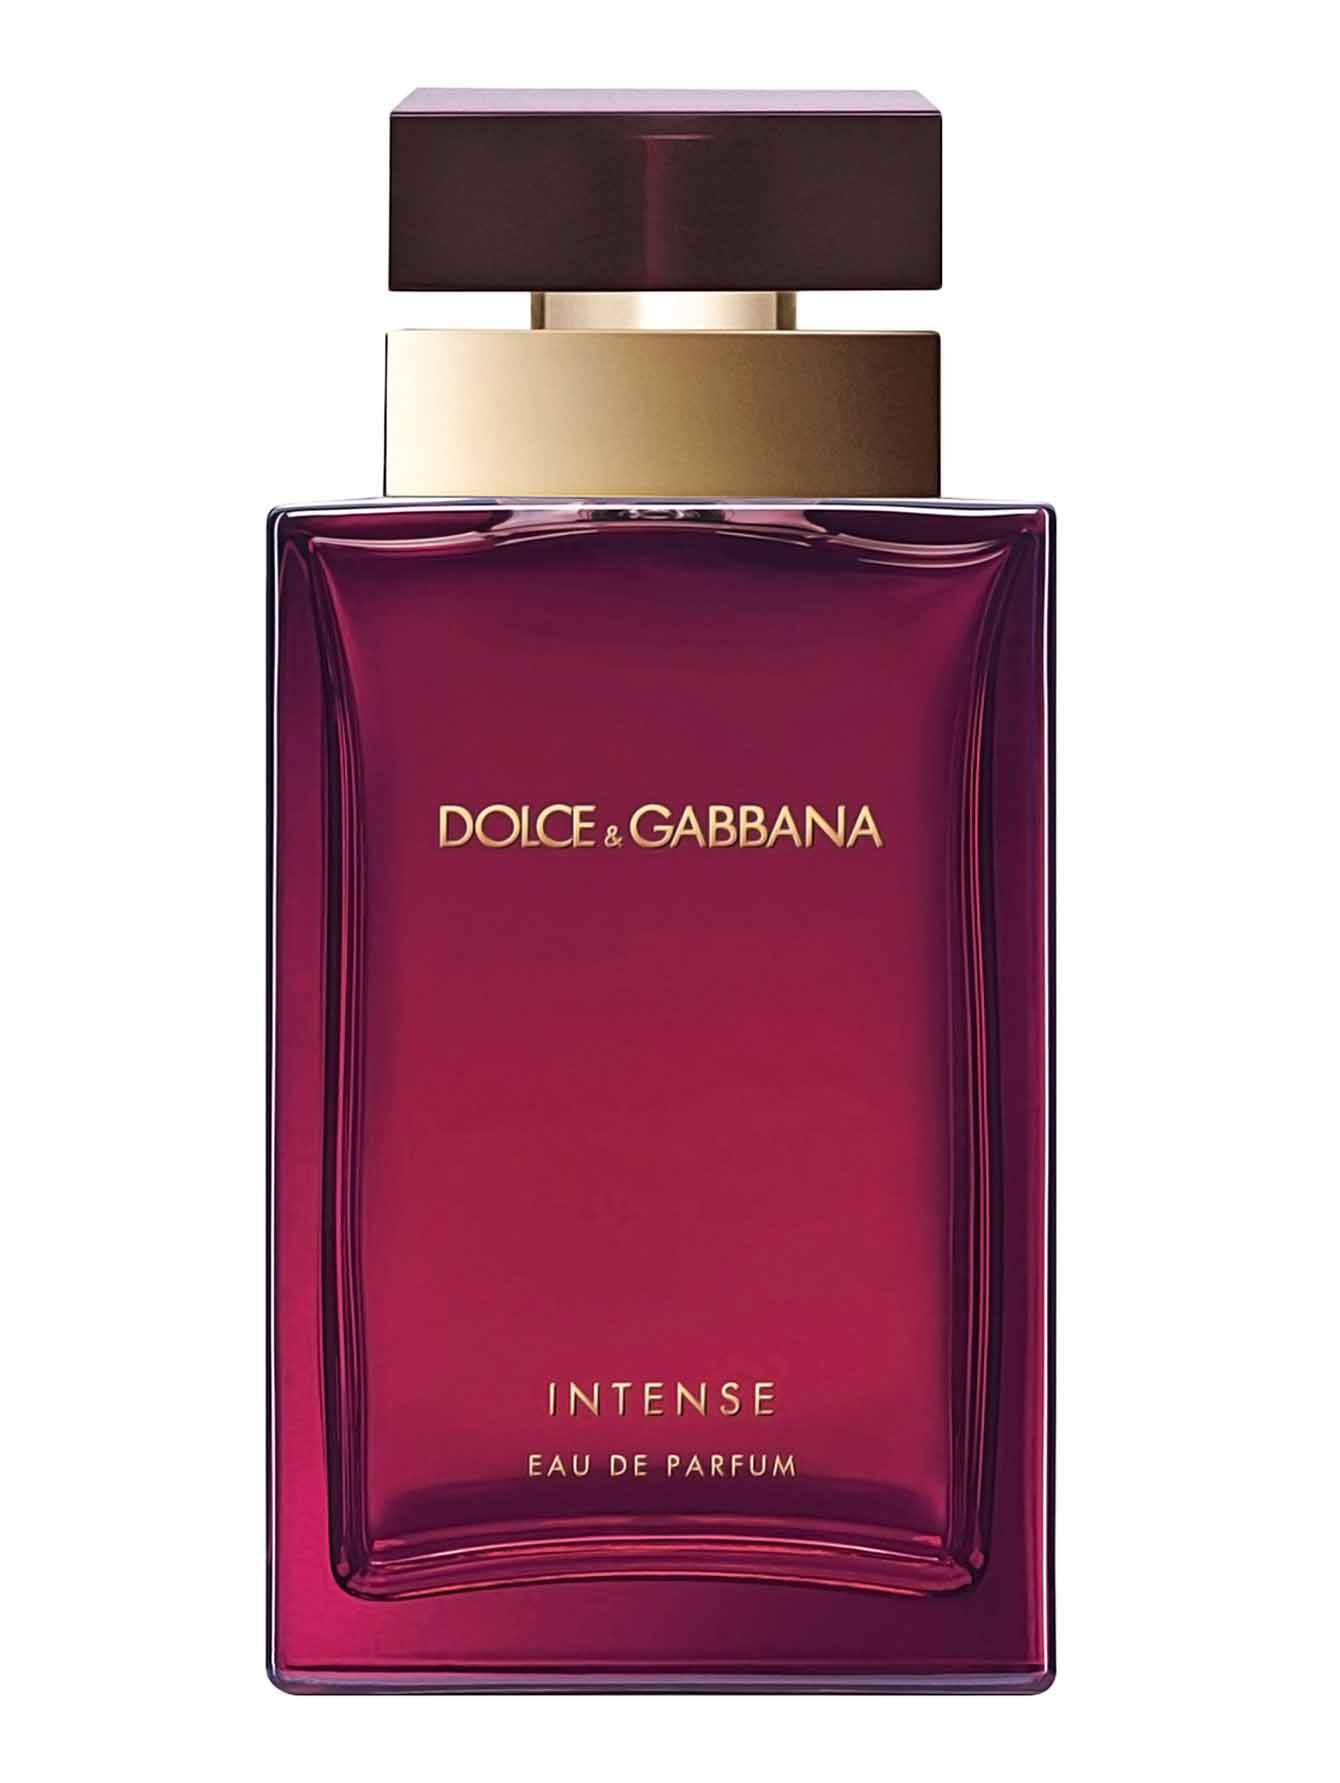 Дольче габбана вишня духи. Dolce & Gabbana pour femme 100 мл. Дольче Габбана Интенс. Dolce&Gabbana pour femme intense. Dolce Gabbana intense женские 100ml.